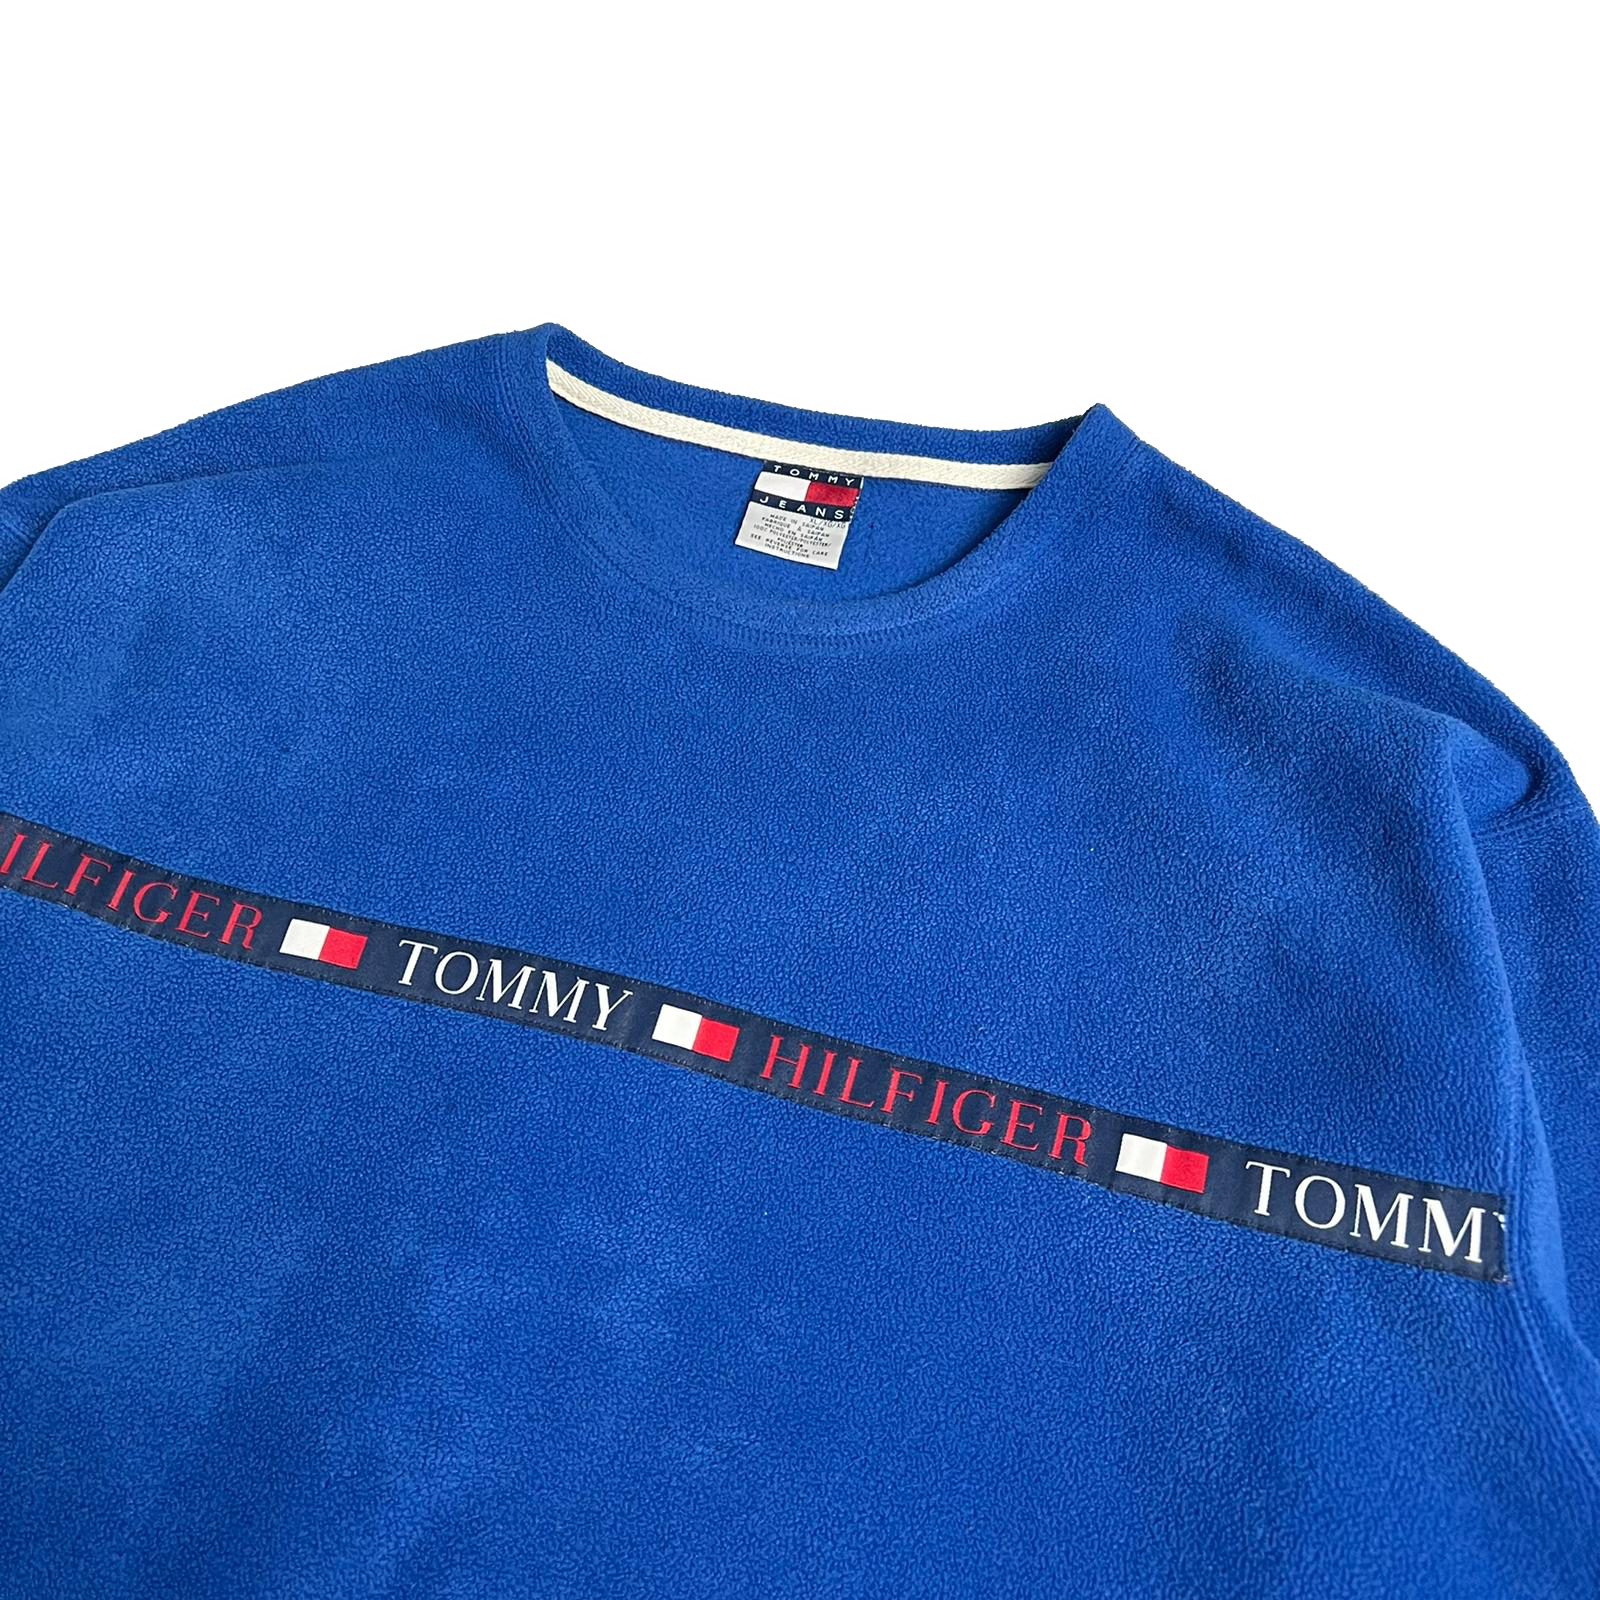 90's Tommy Hilfiger fleece